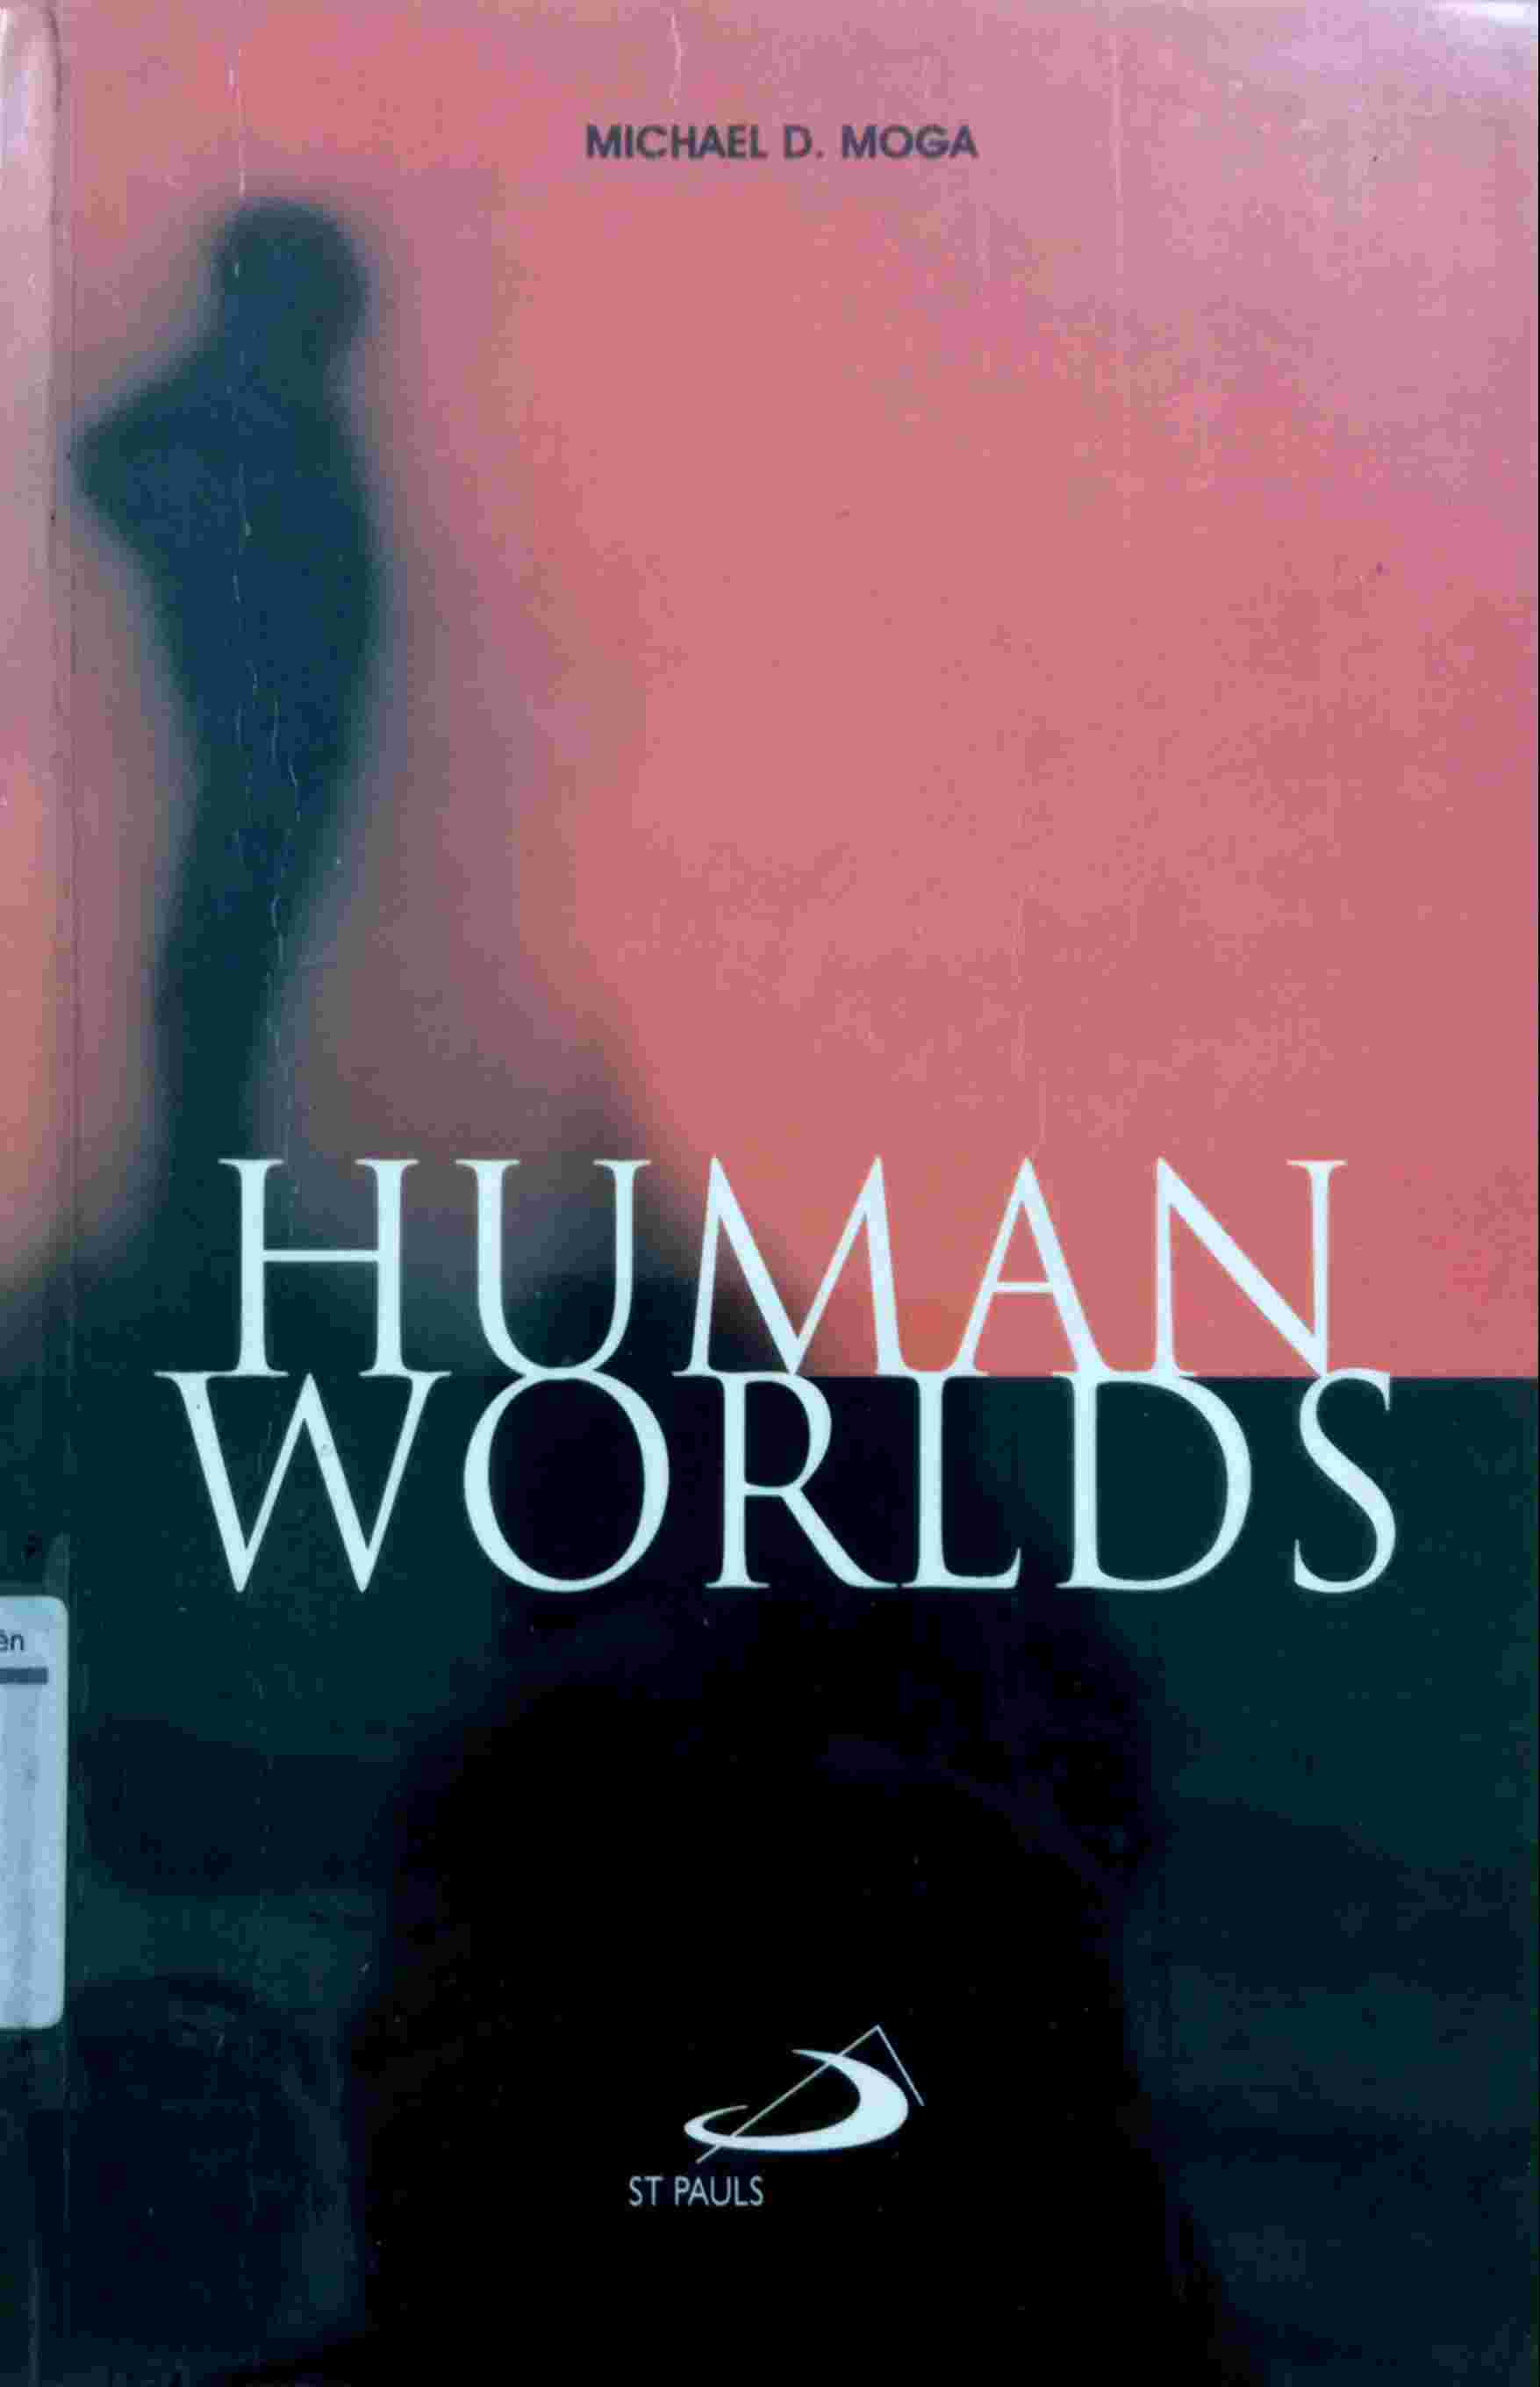 HUMAN WORDS